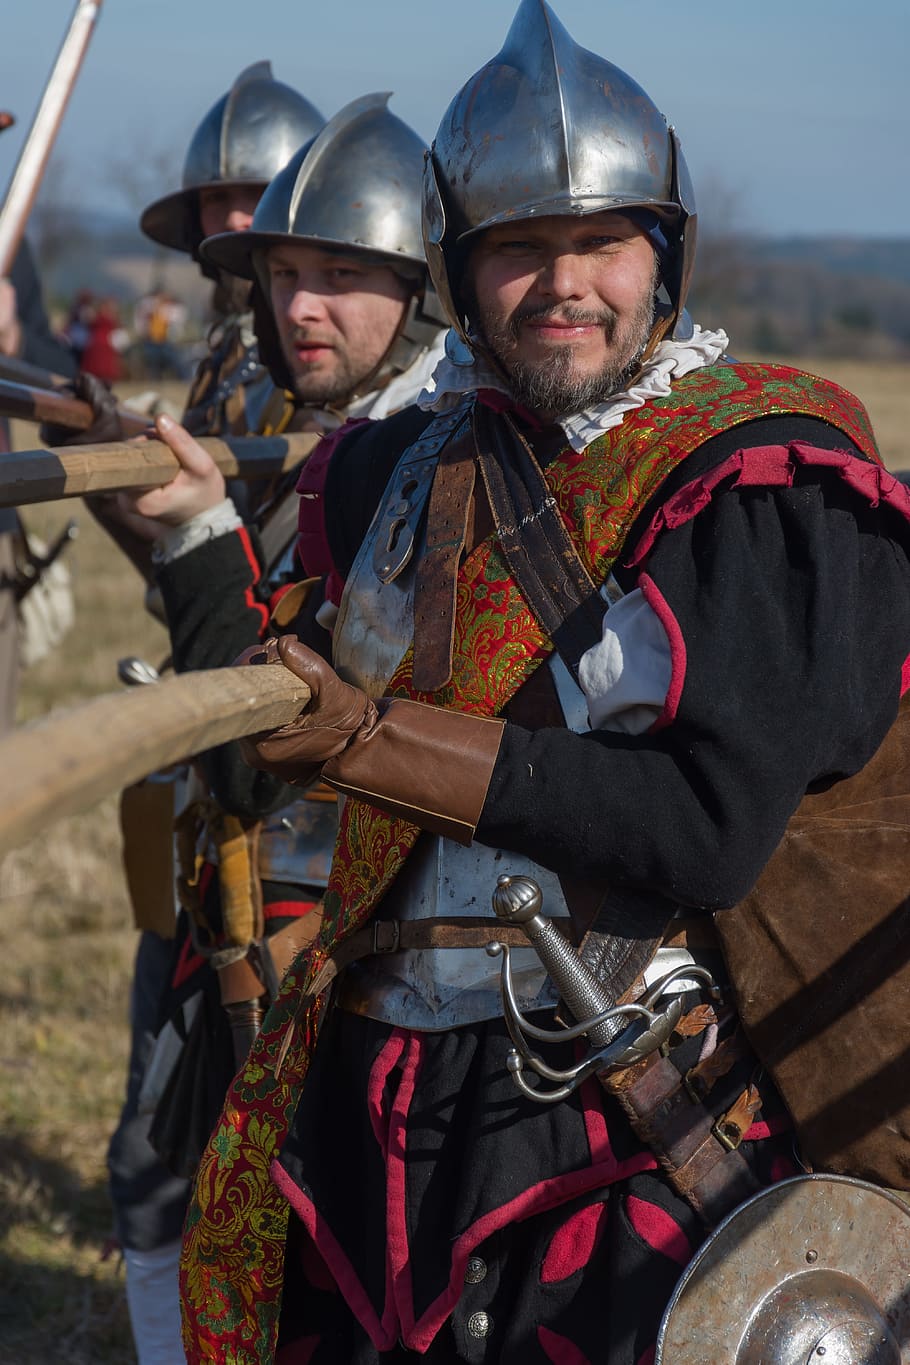 pikanýr, battle, jankau, Battle Of Jankau, battle re-enactment, historical costume, warfare, infantry, helmet, two people